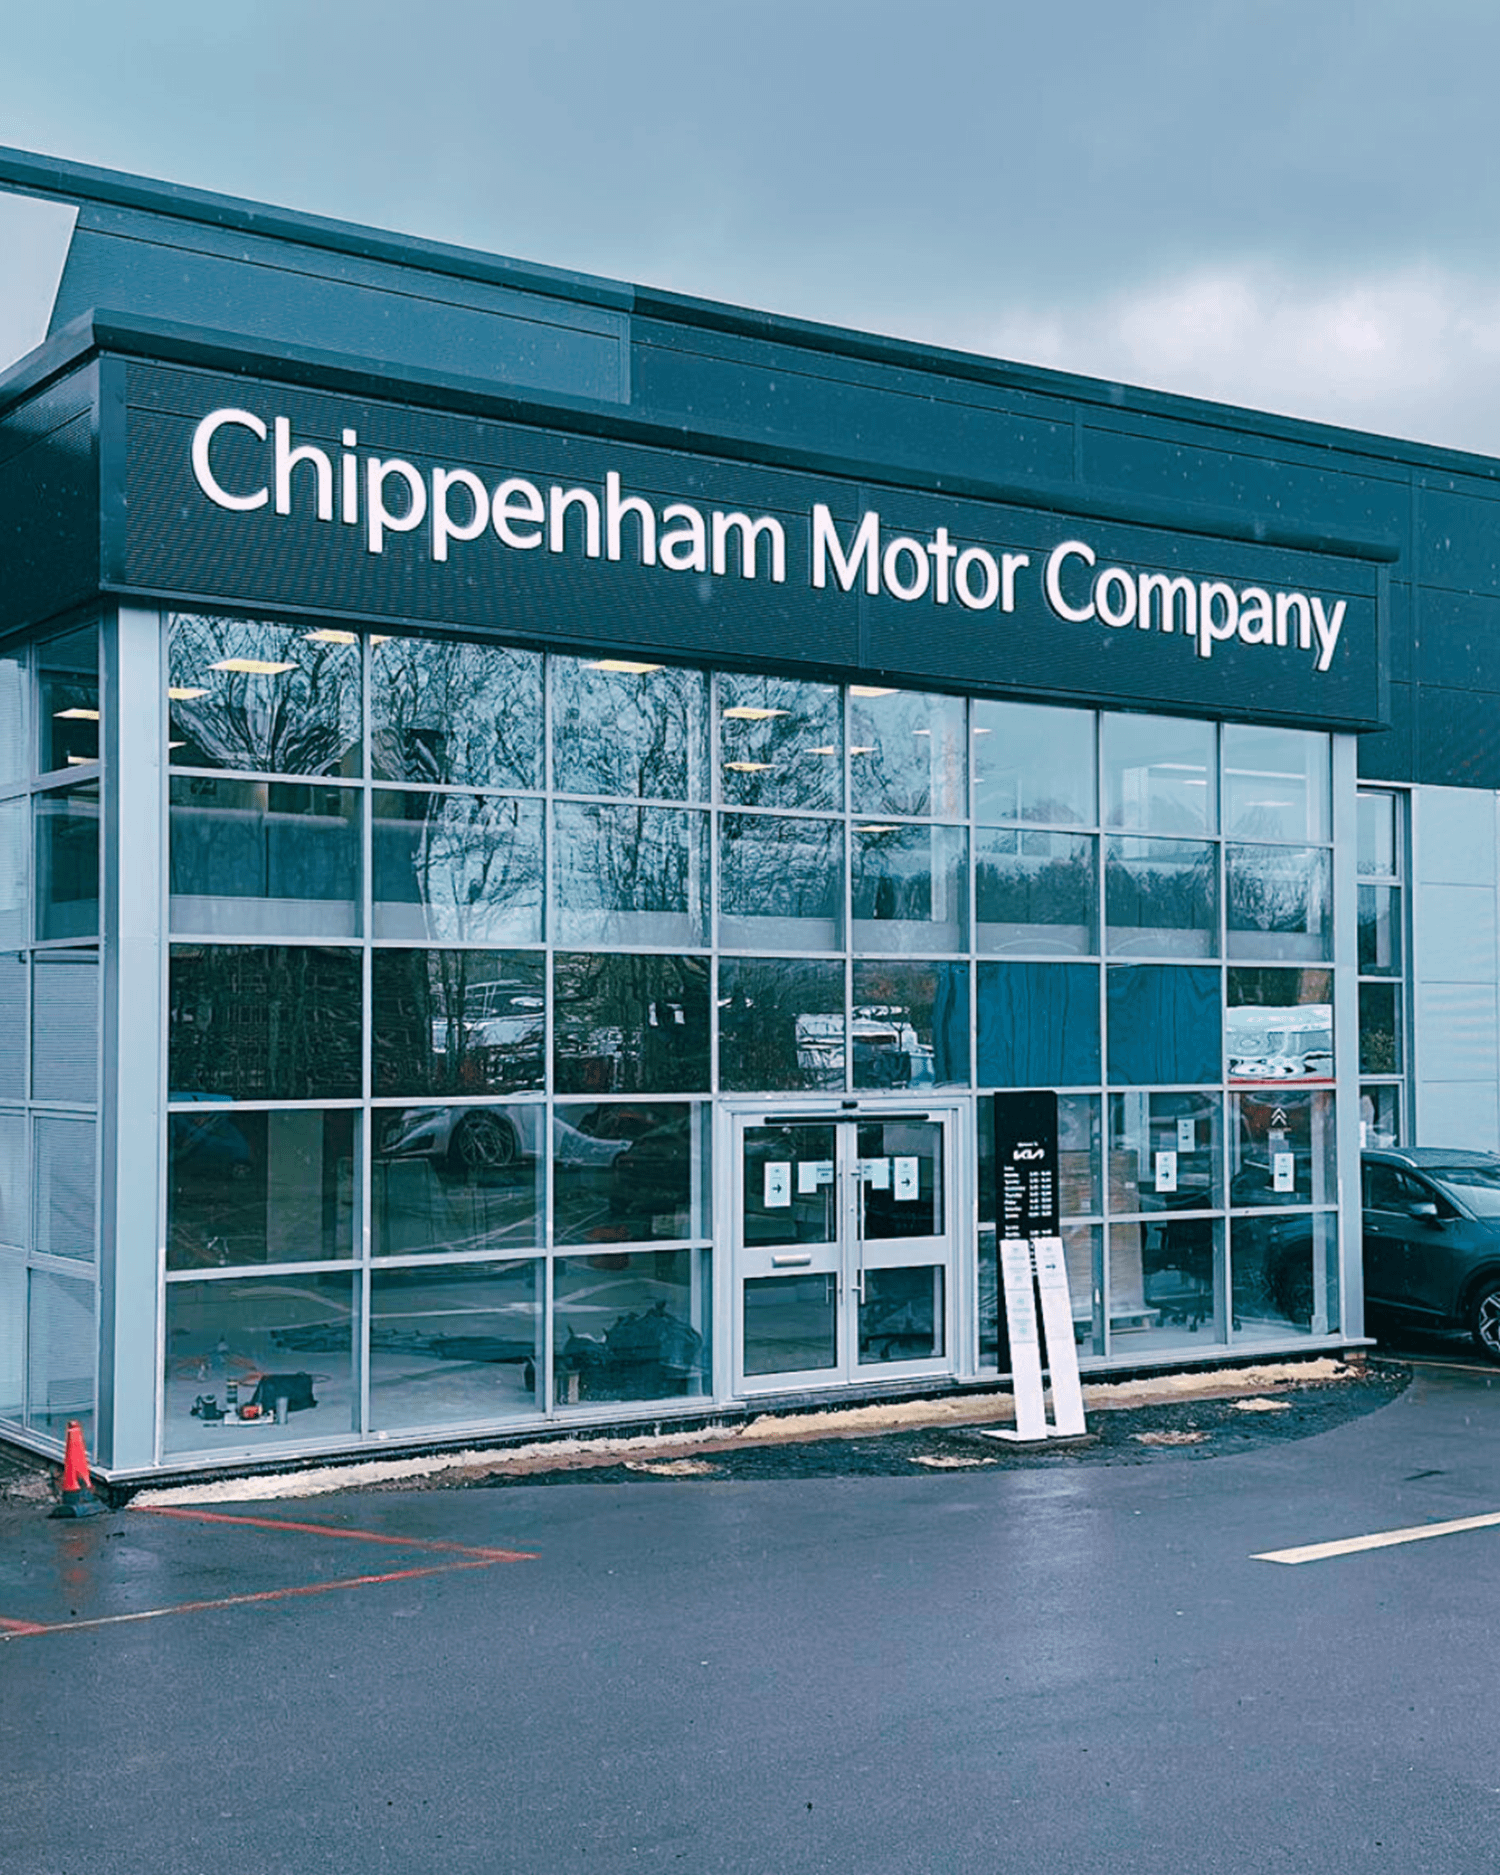 New Chippenham Motor Company signs above the dealership building door